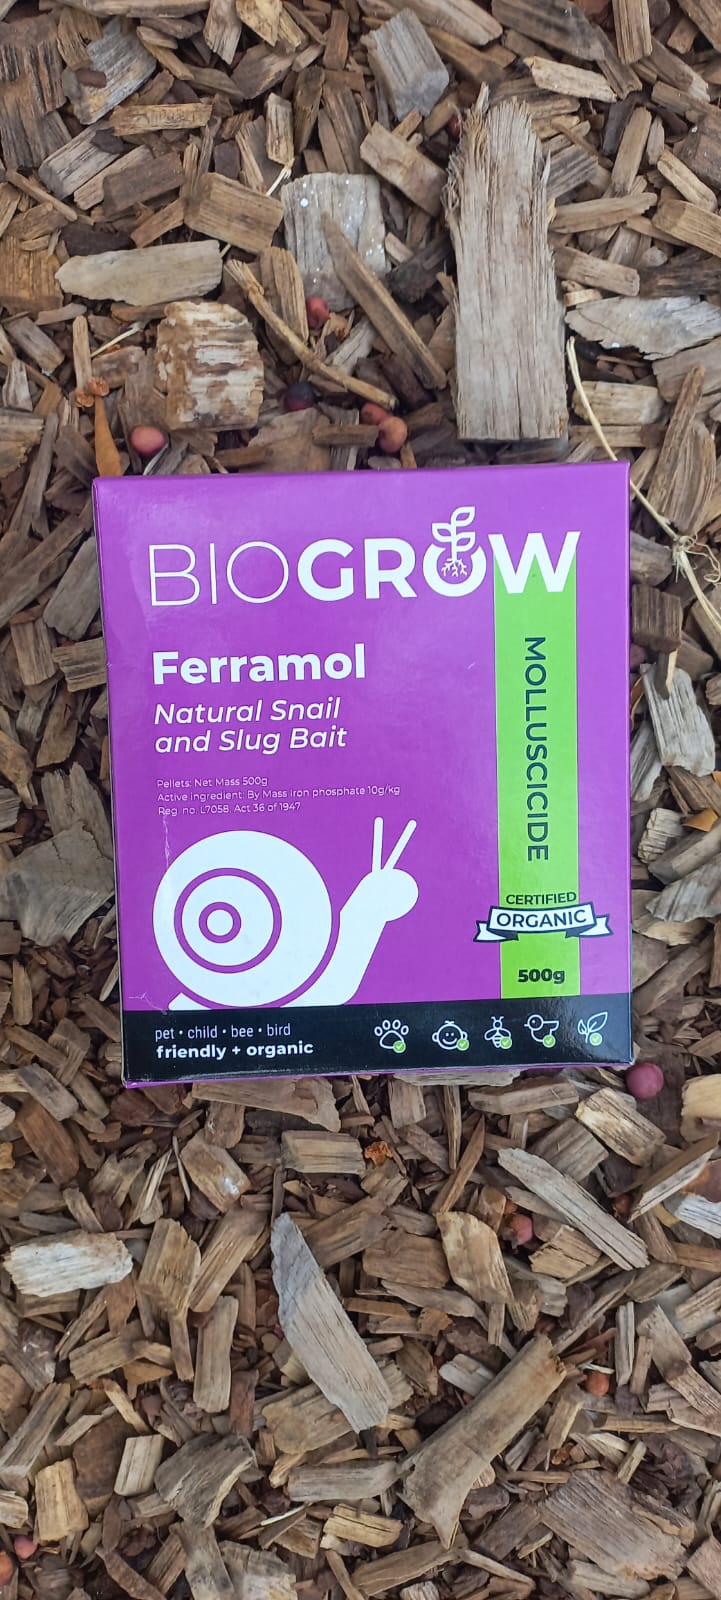 Ferramol (Biogrow)